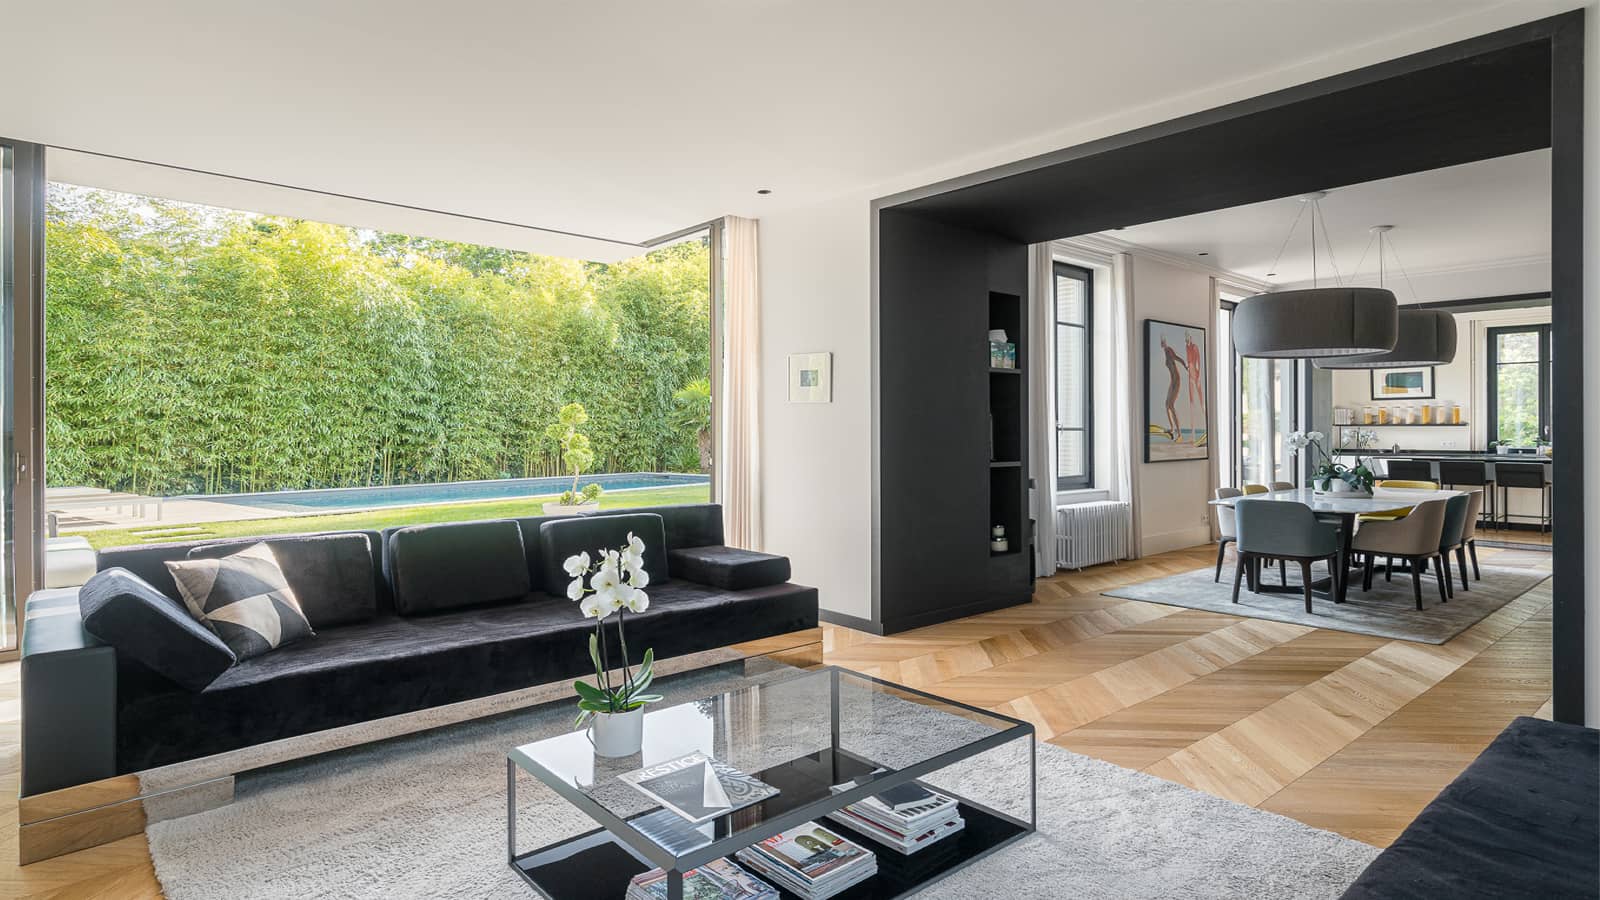 luxury-interior-renovation-vielliard-francheteau-architects